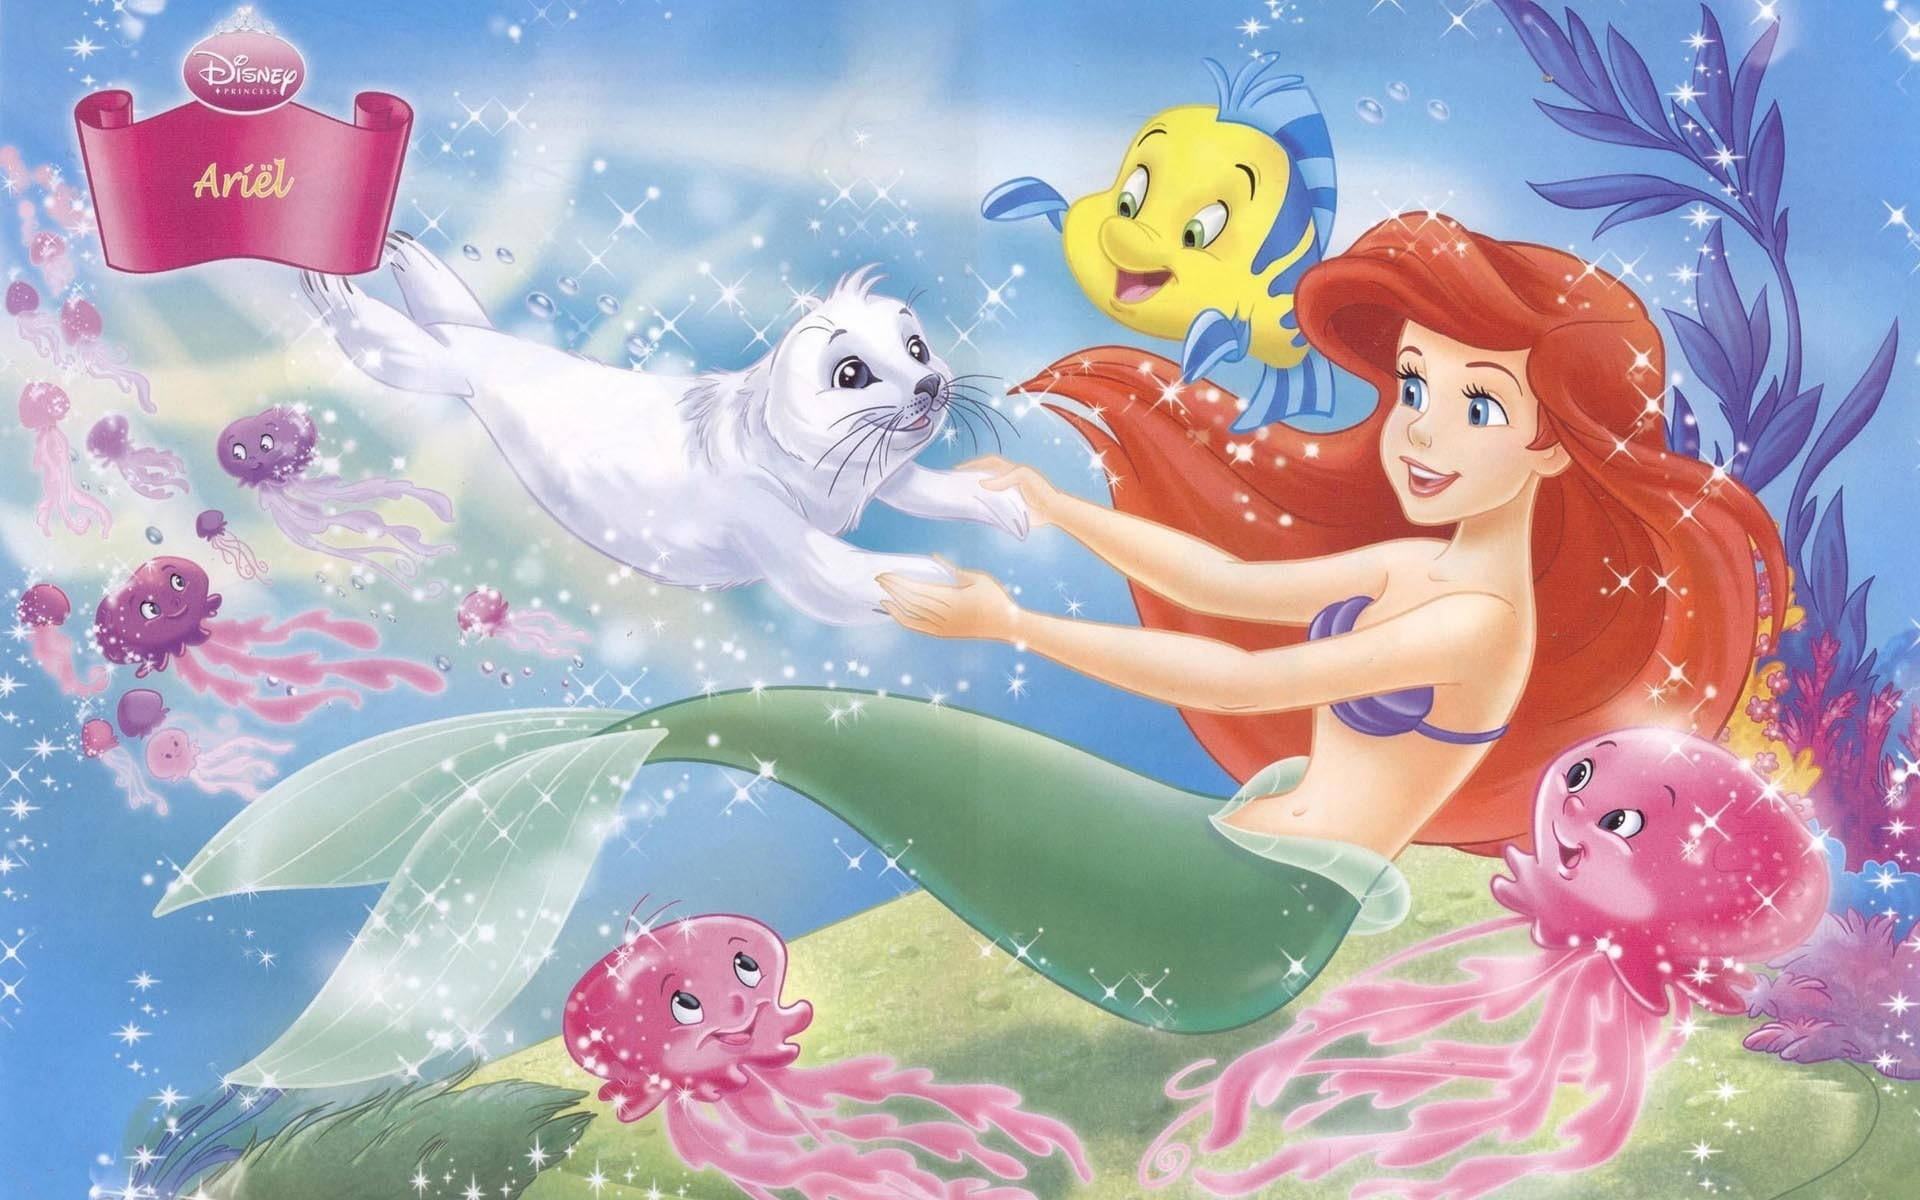 Disney Ariel And Friends